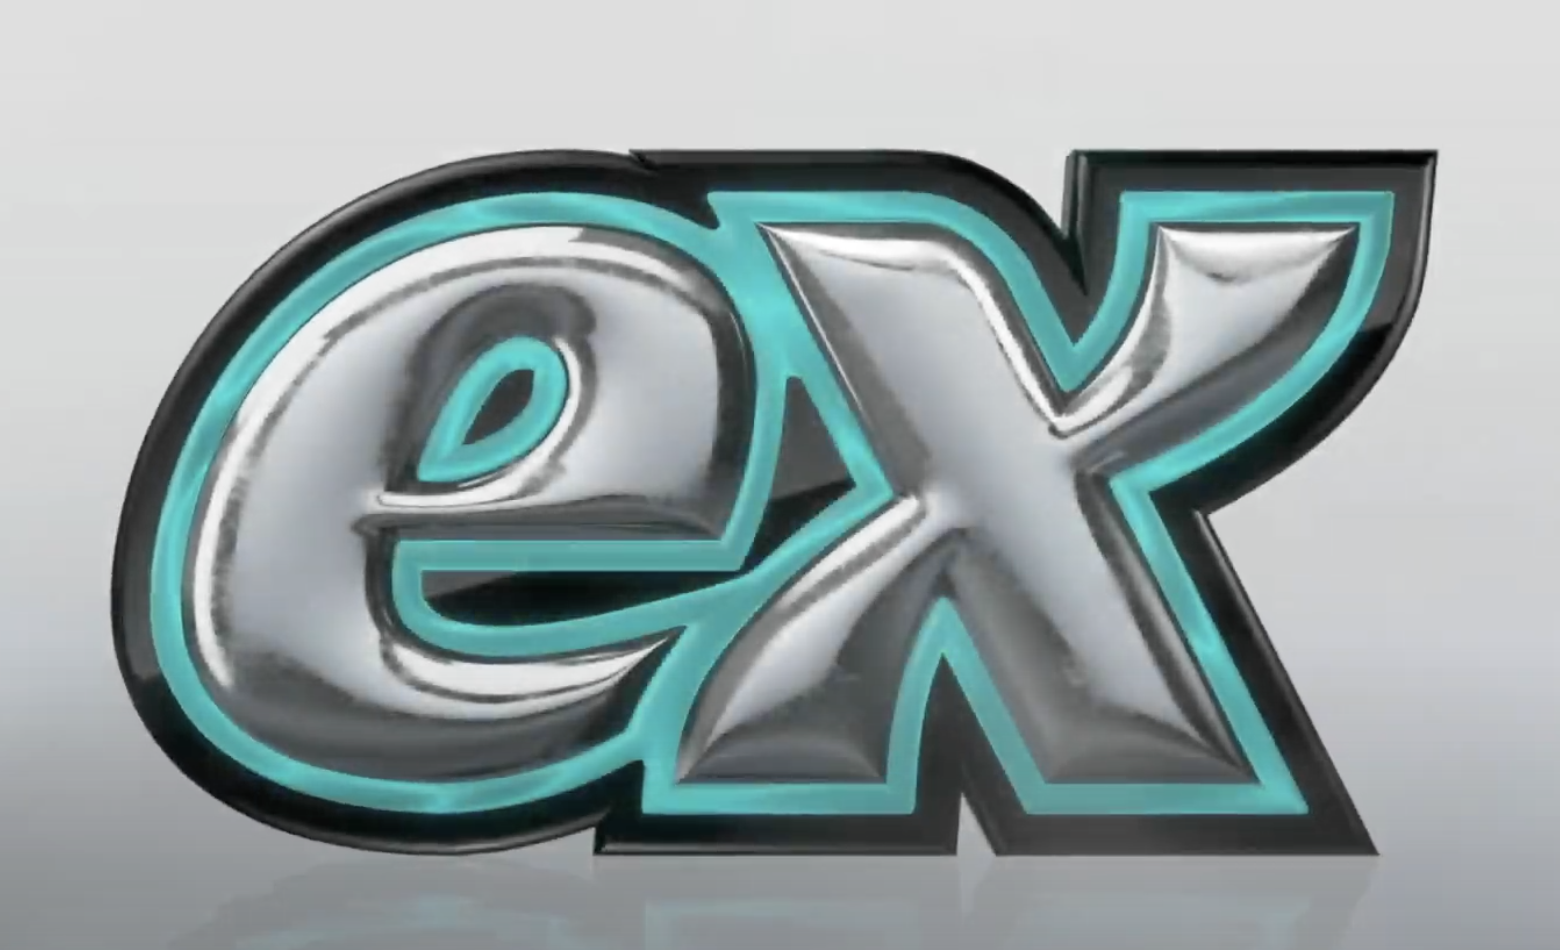 The new redesigned ex logo